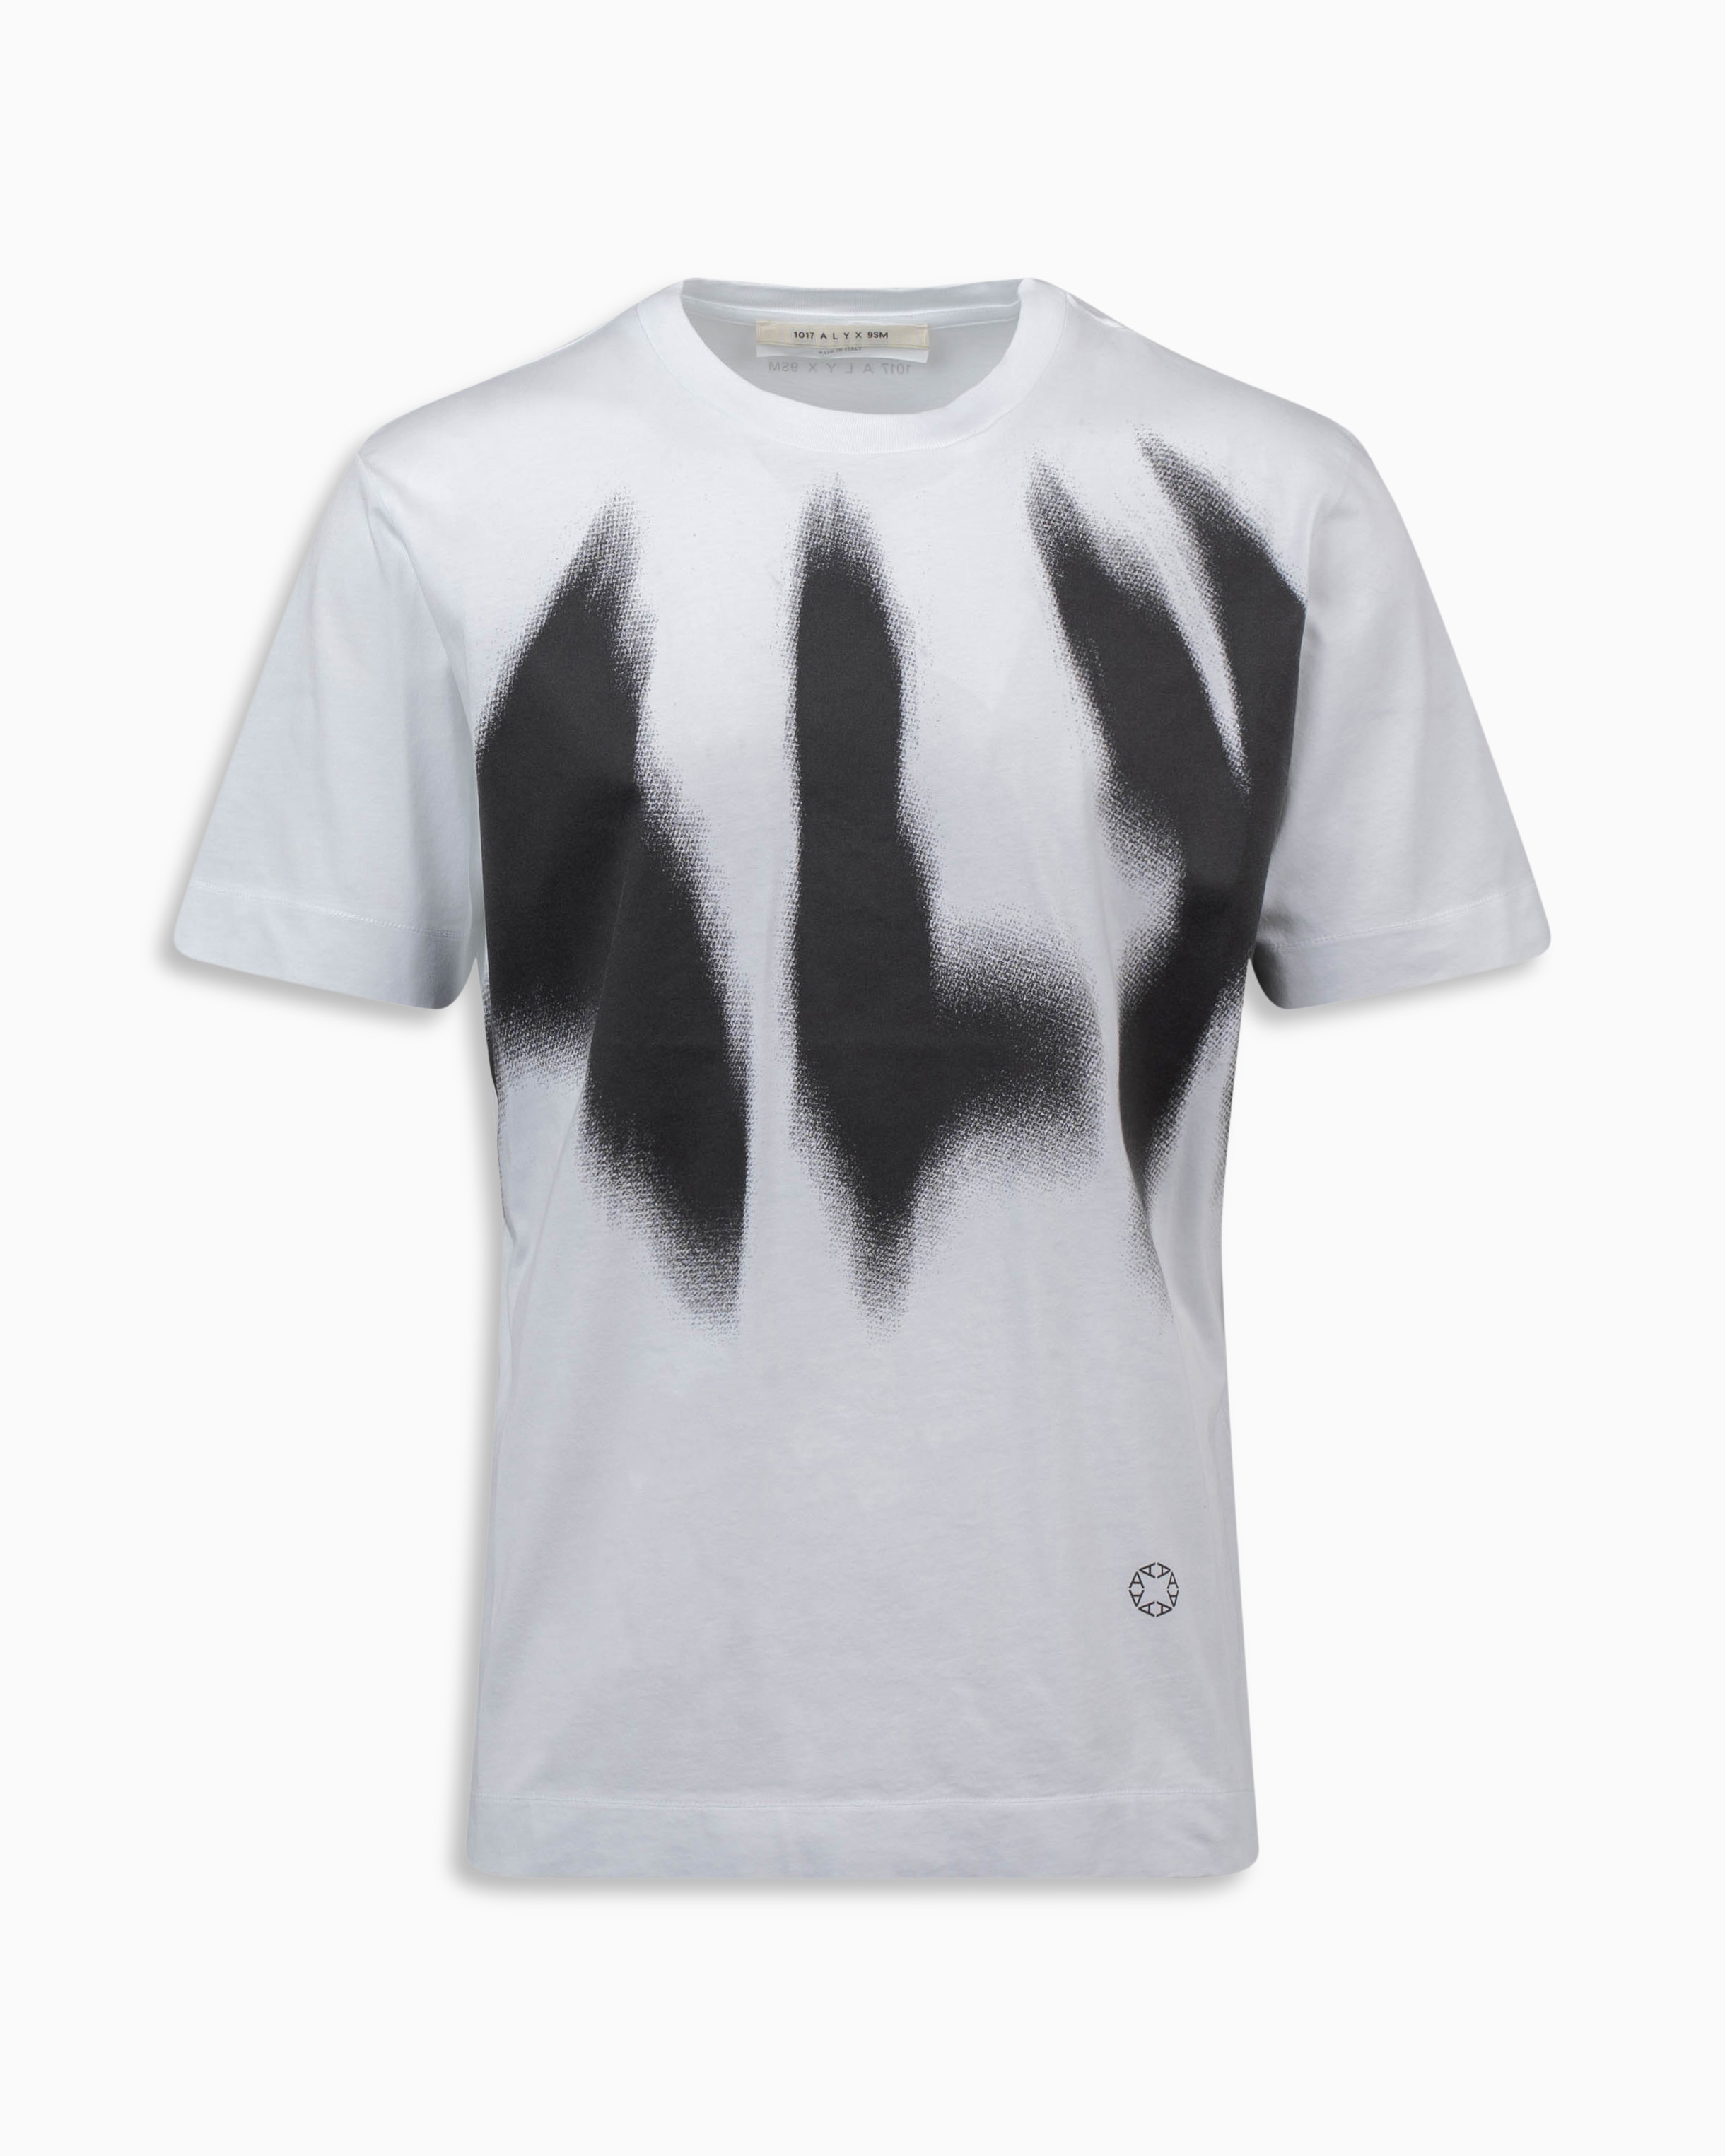 Phantom Logo S/S Tee 1017 ALYX 9SM Tops T-Shirts White